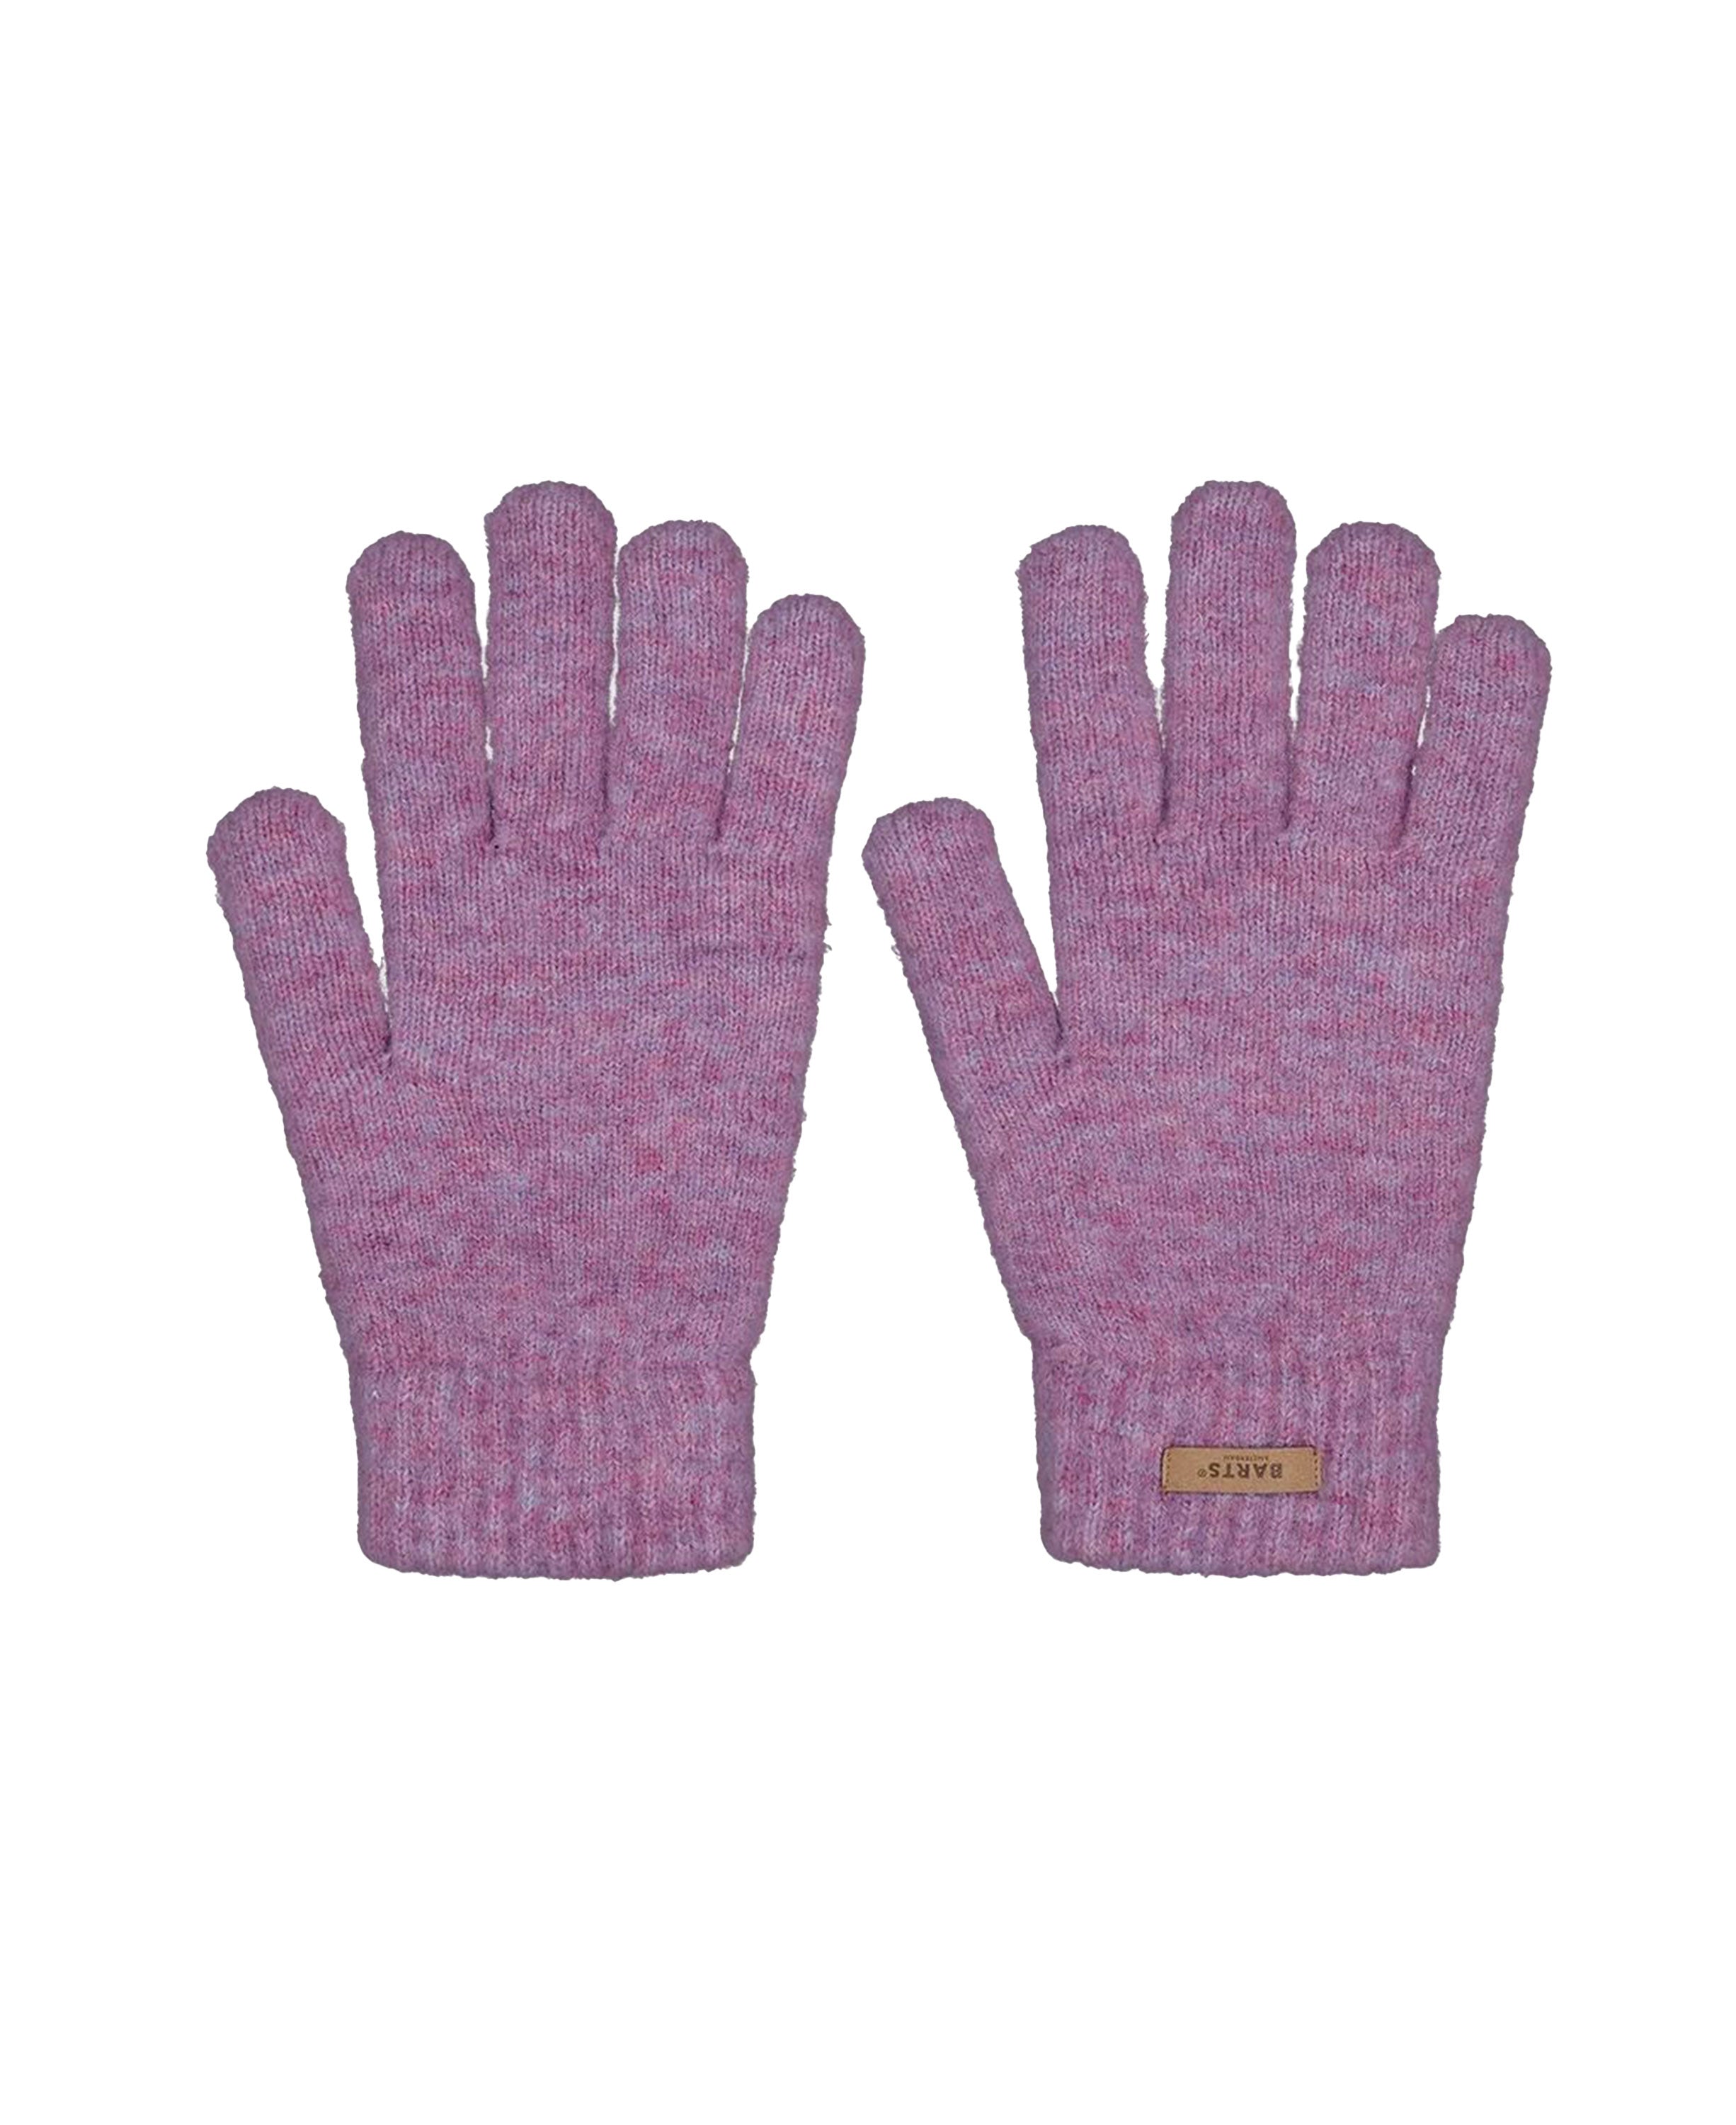 Witzia Gloves - Berry